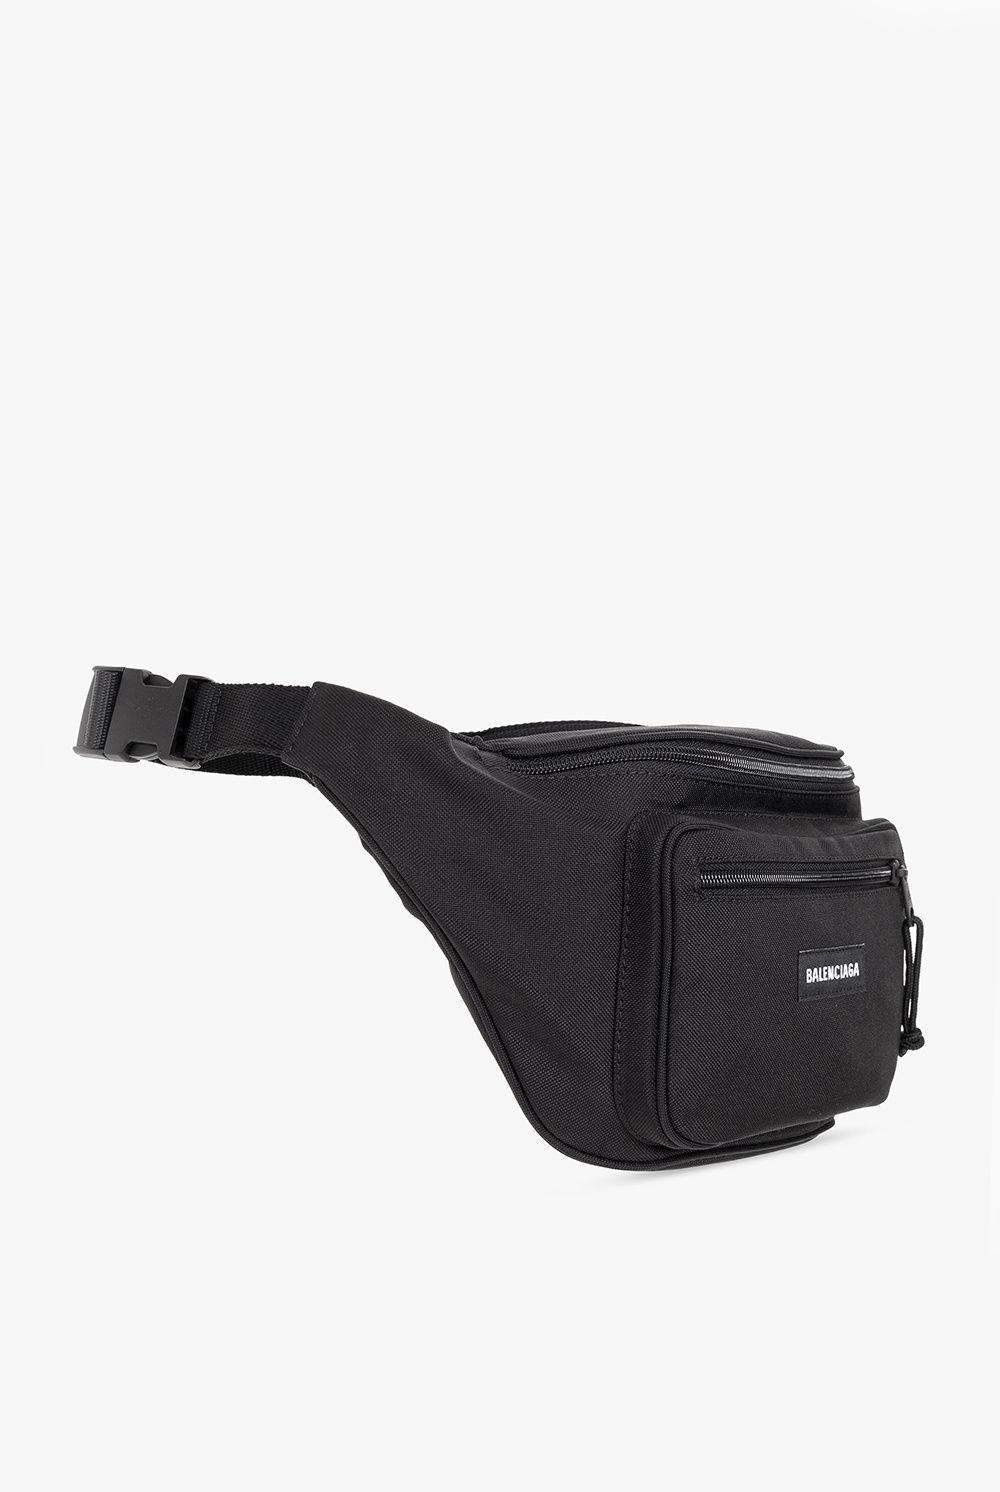 Balenciaga Graffiti Explorer Belt Bag Leather Medium Black 1010891